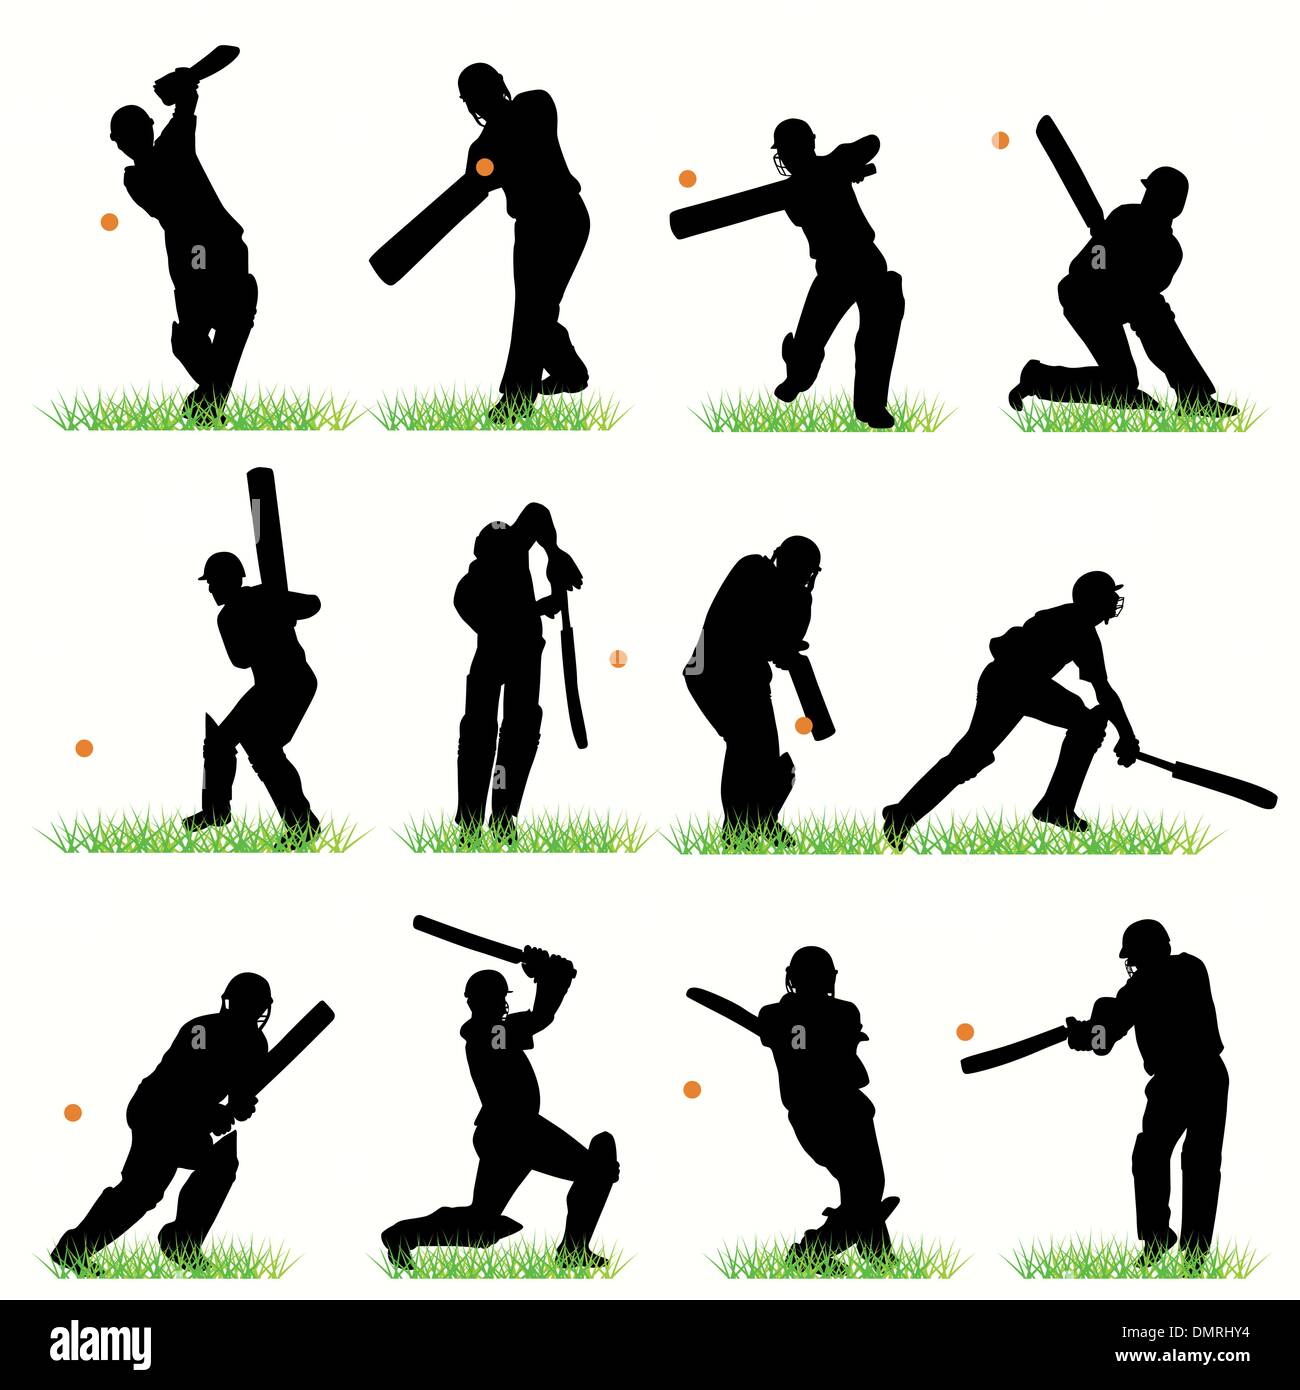 Cricket silhouettes set Stock Vector